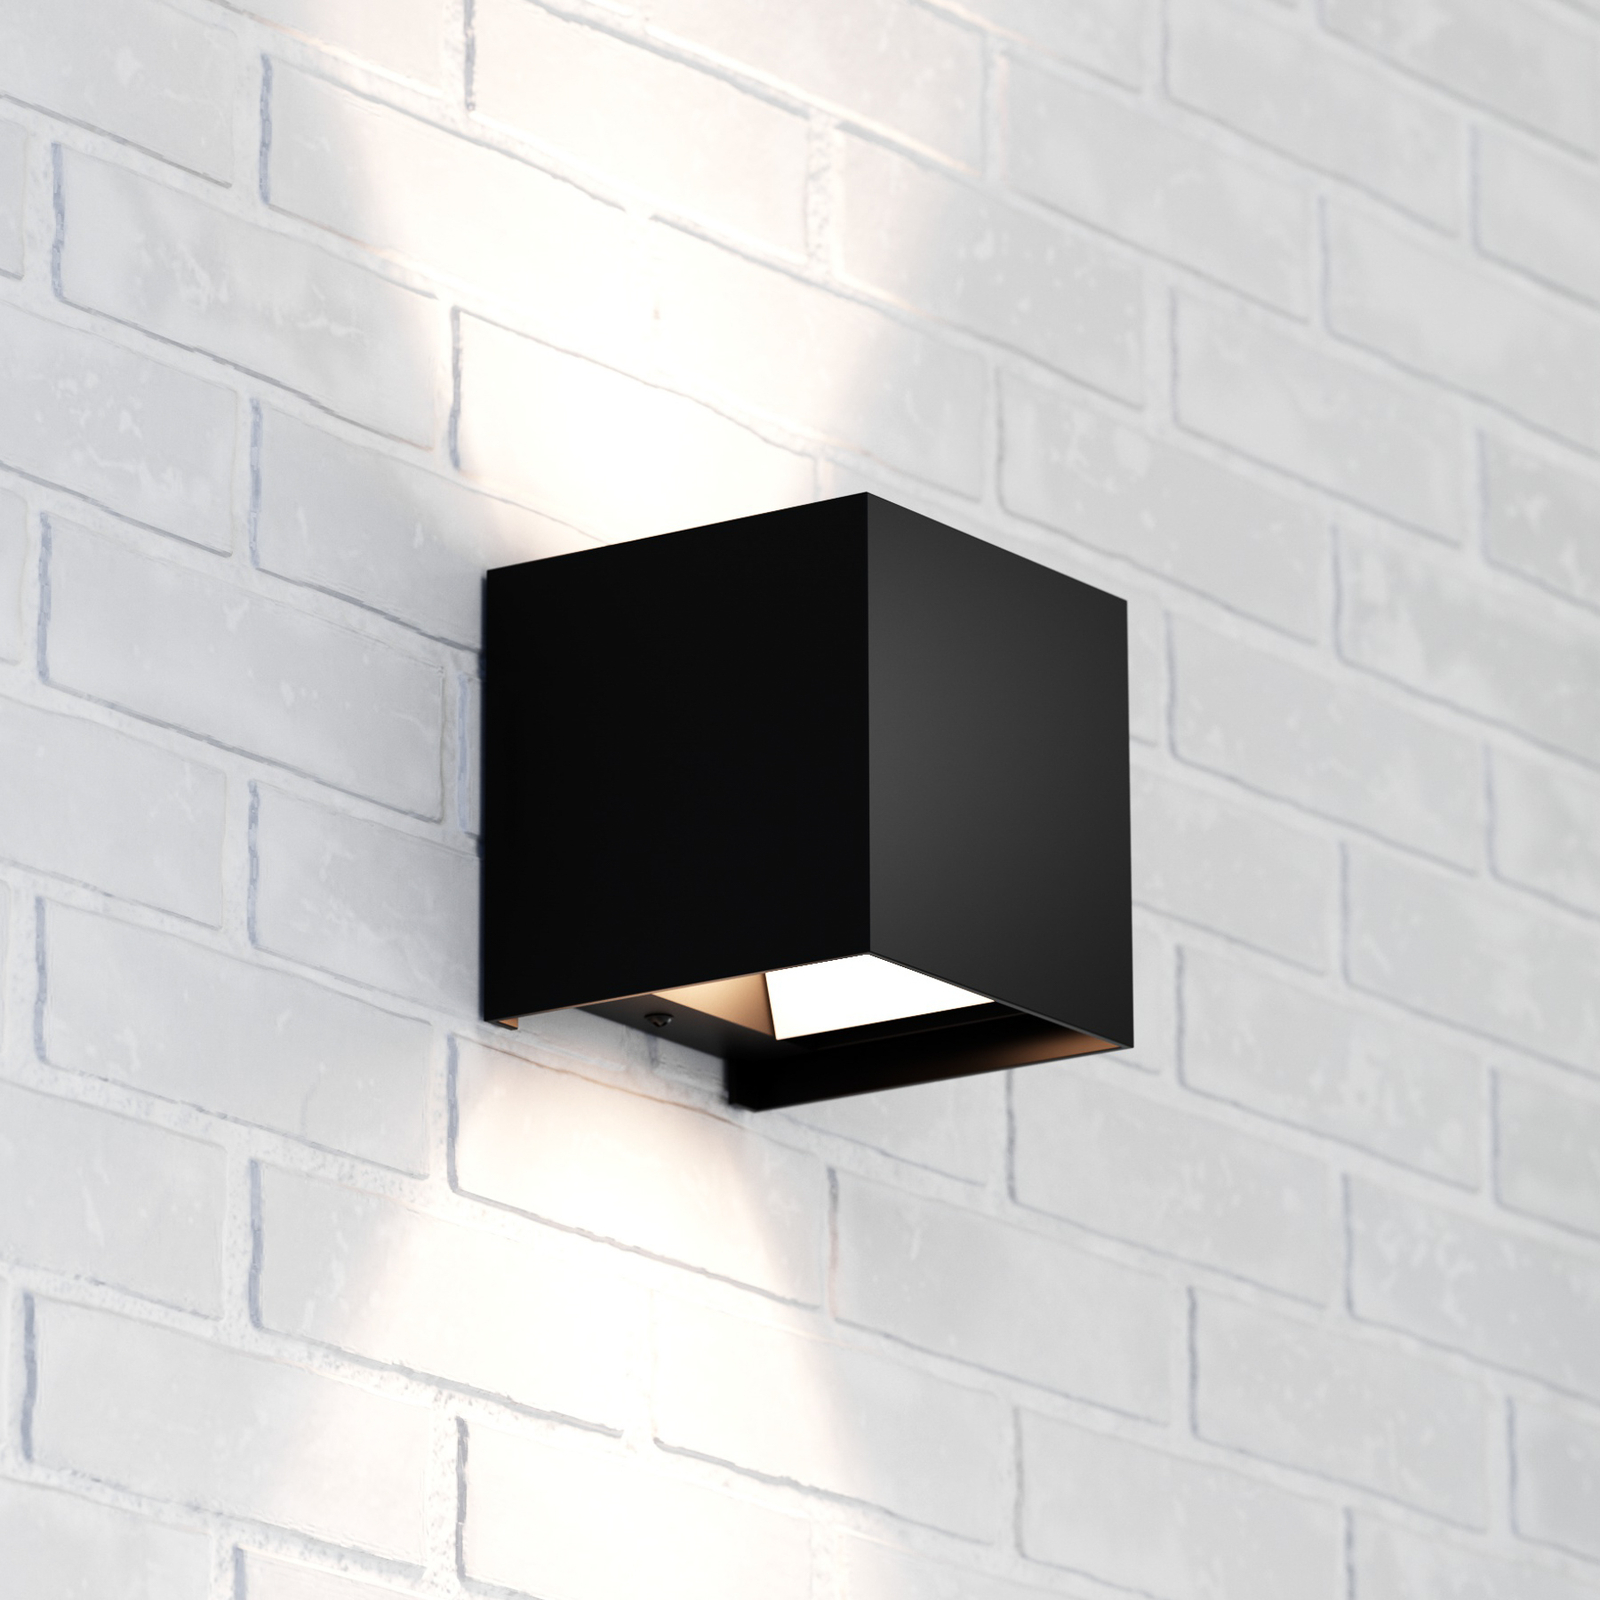 Zuza 2 wall light, black, metal, four blades, 10 cm, G9